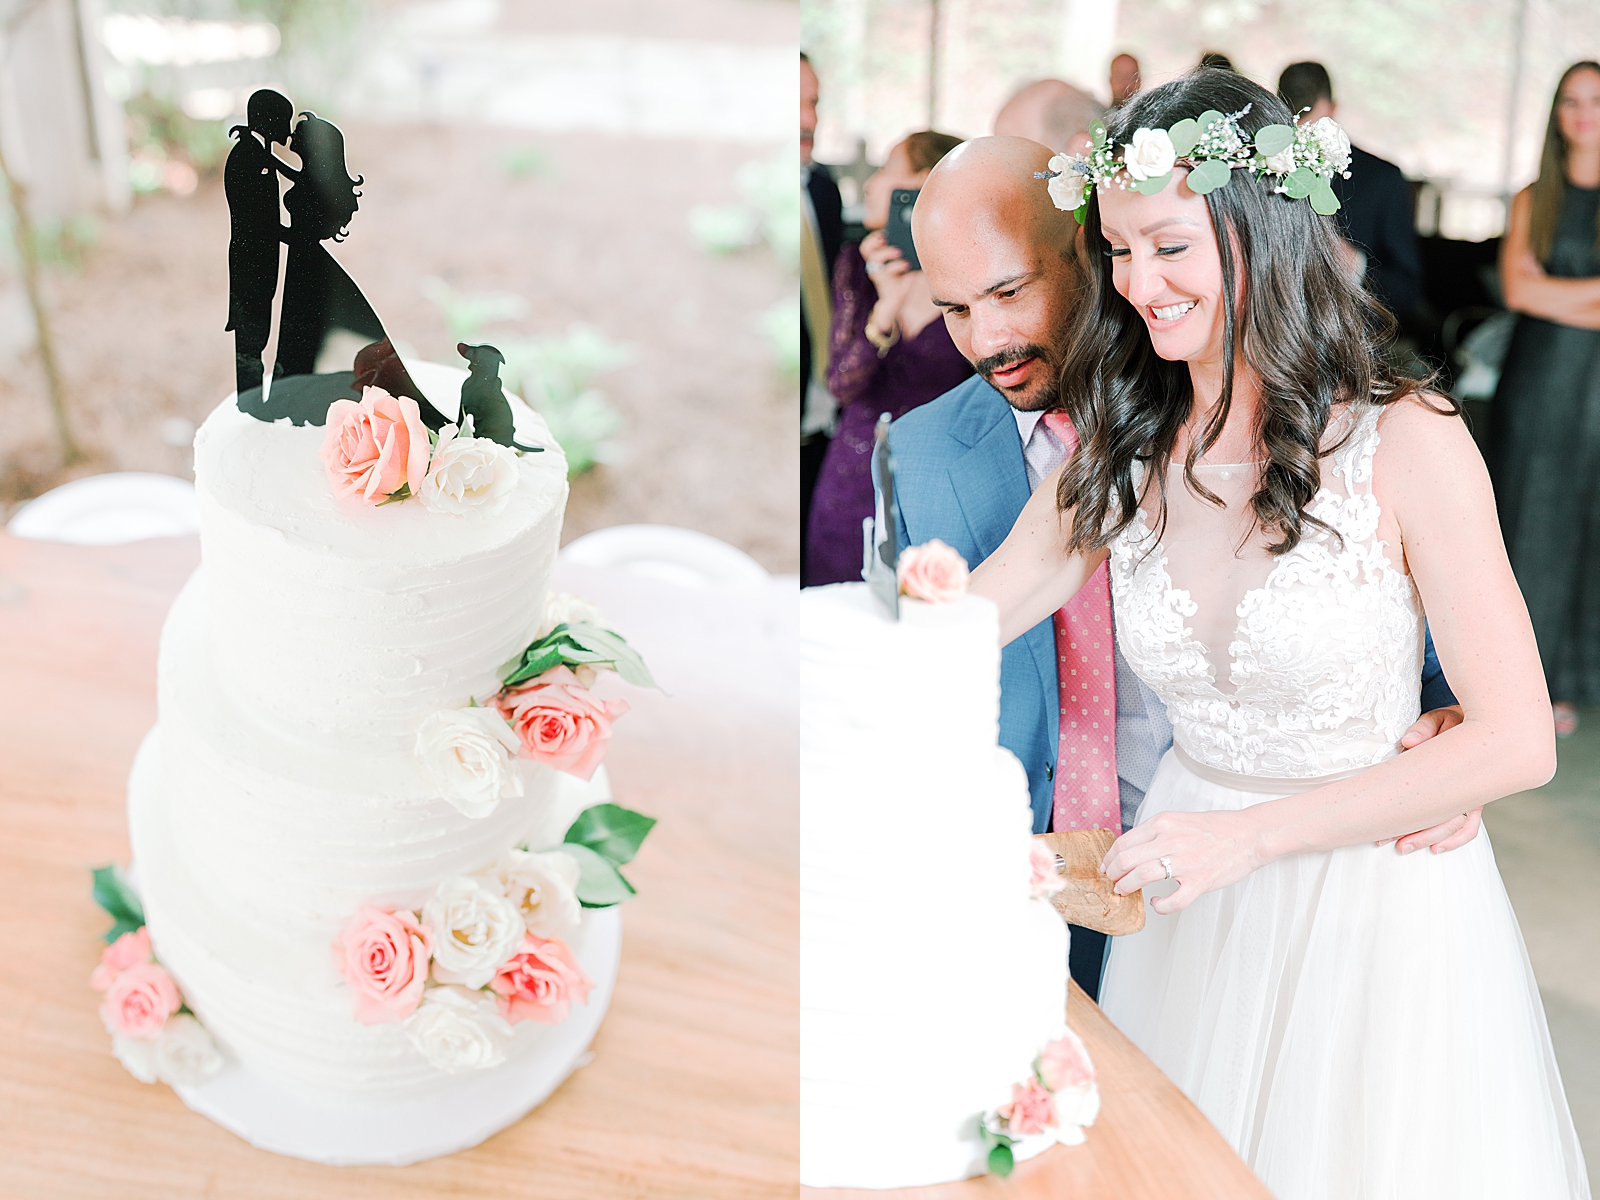 Spring Hawkesdene Wedding Reception Cake and Couple cutting cake Photos